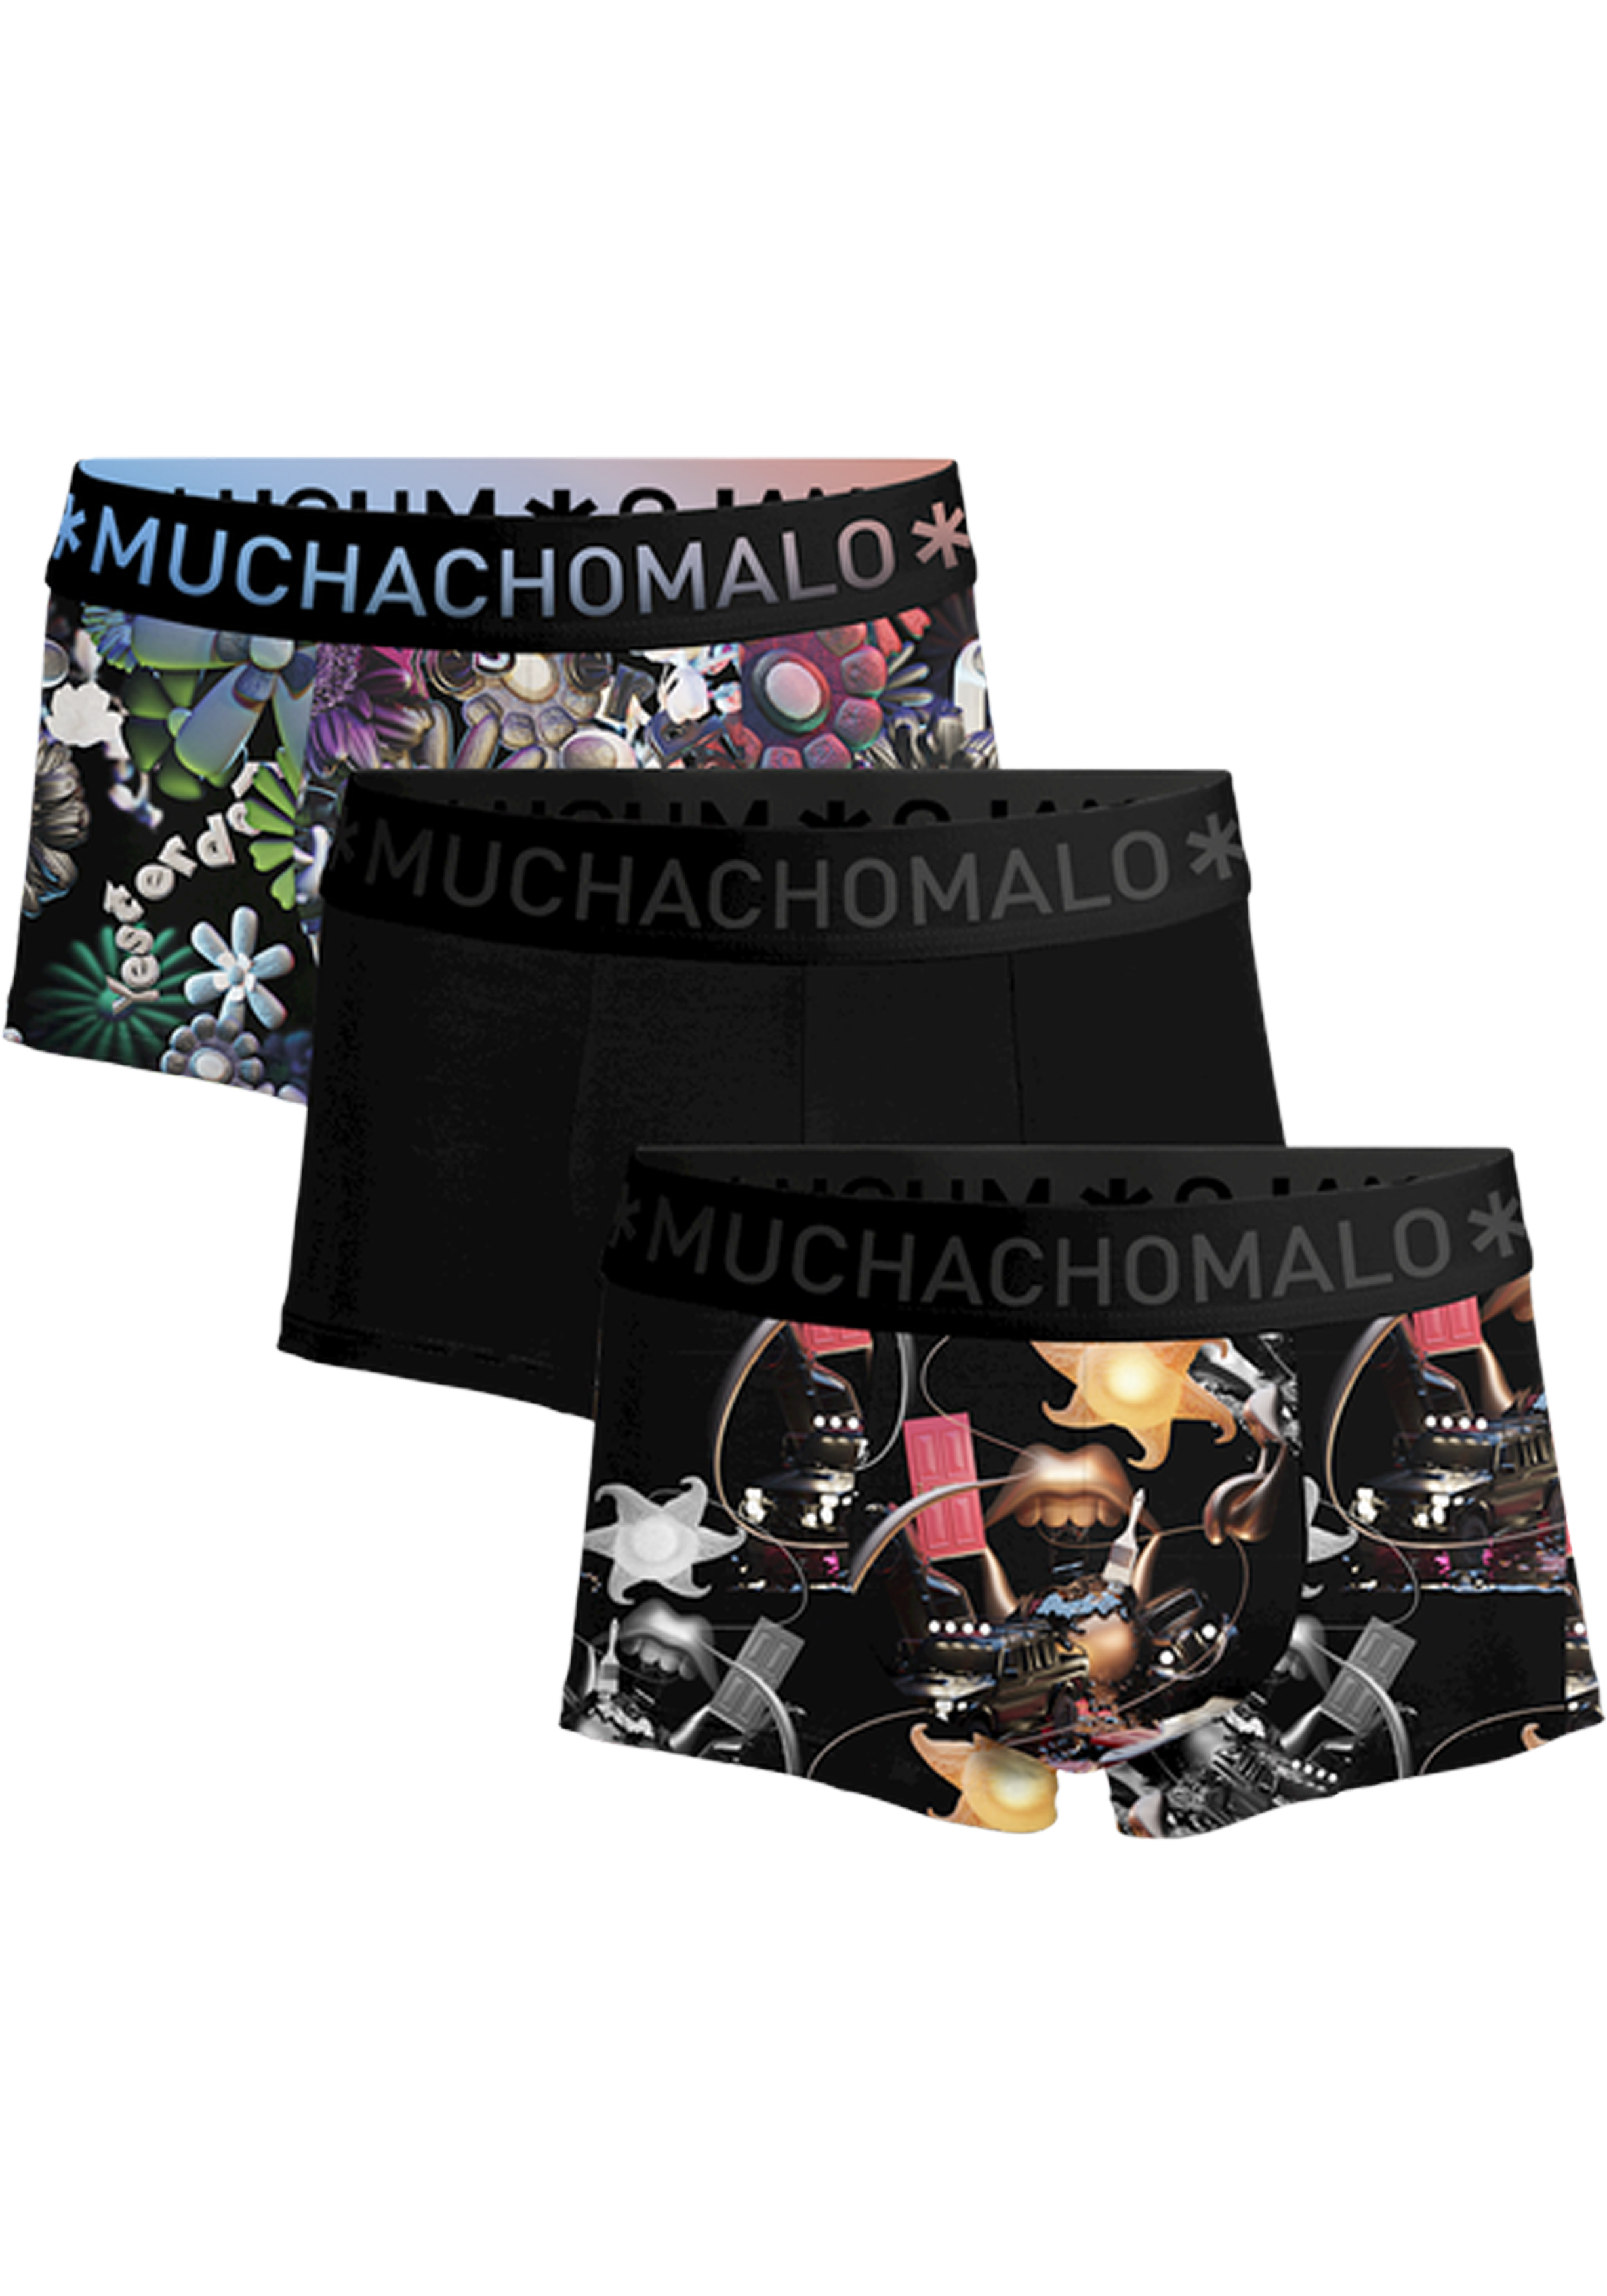 Muchachomalo boxershorts, heren boxers kort (3-pack), Rolling Stones Beatles